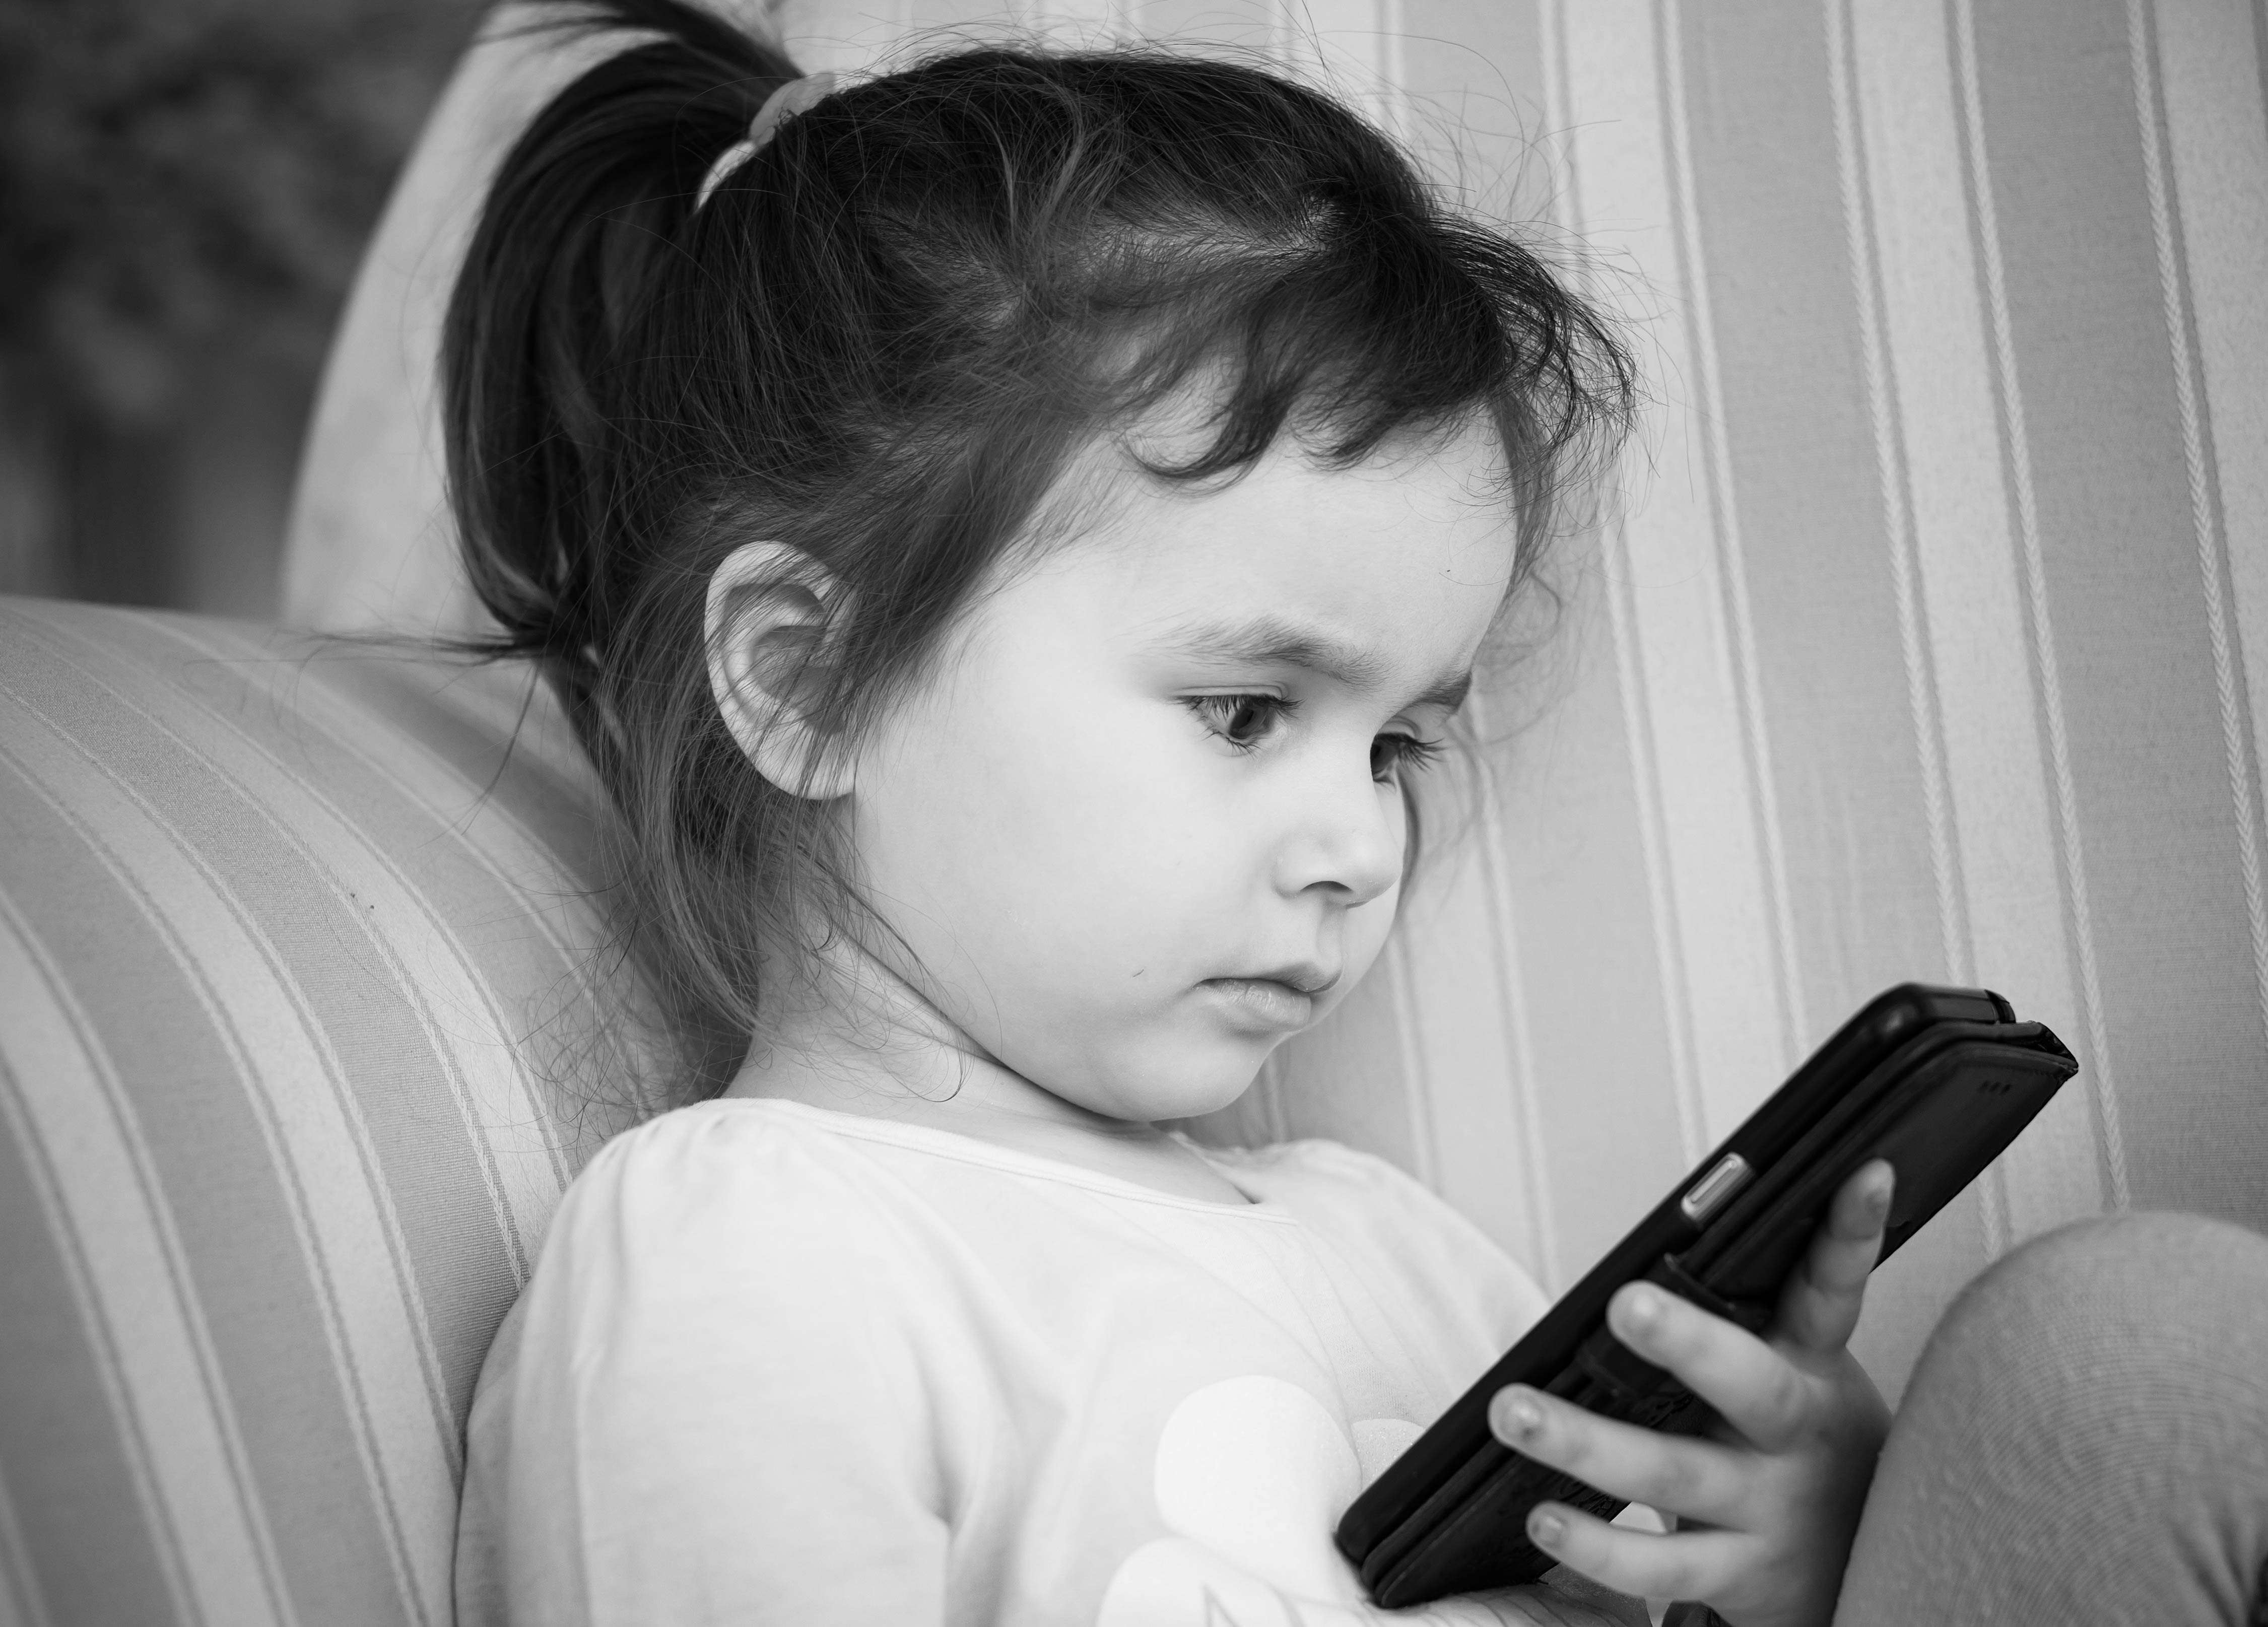 little child using smartphone